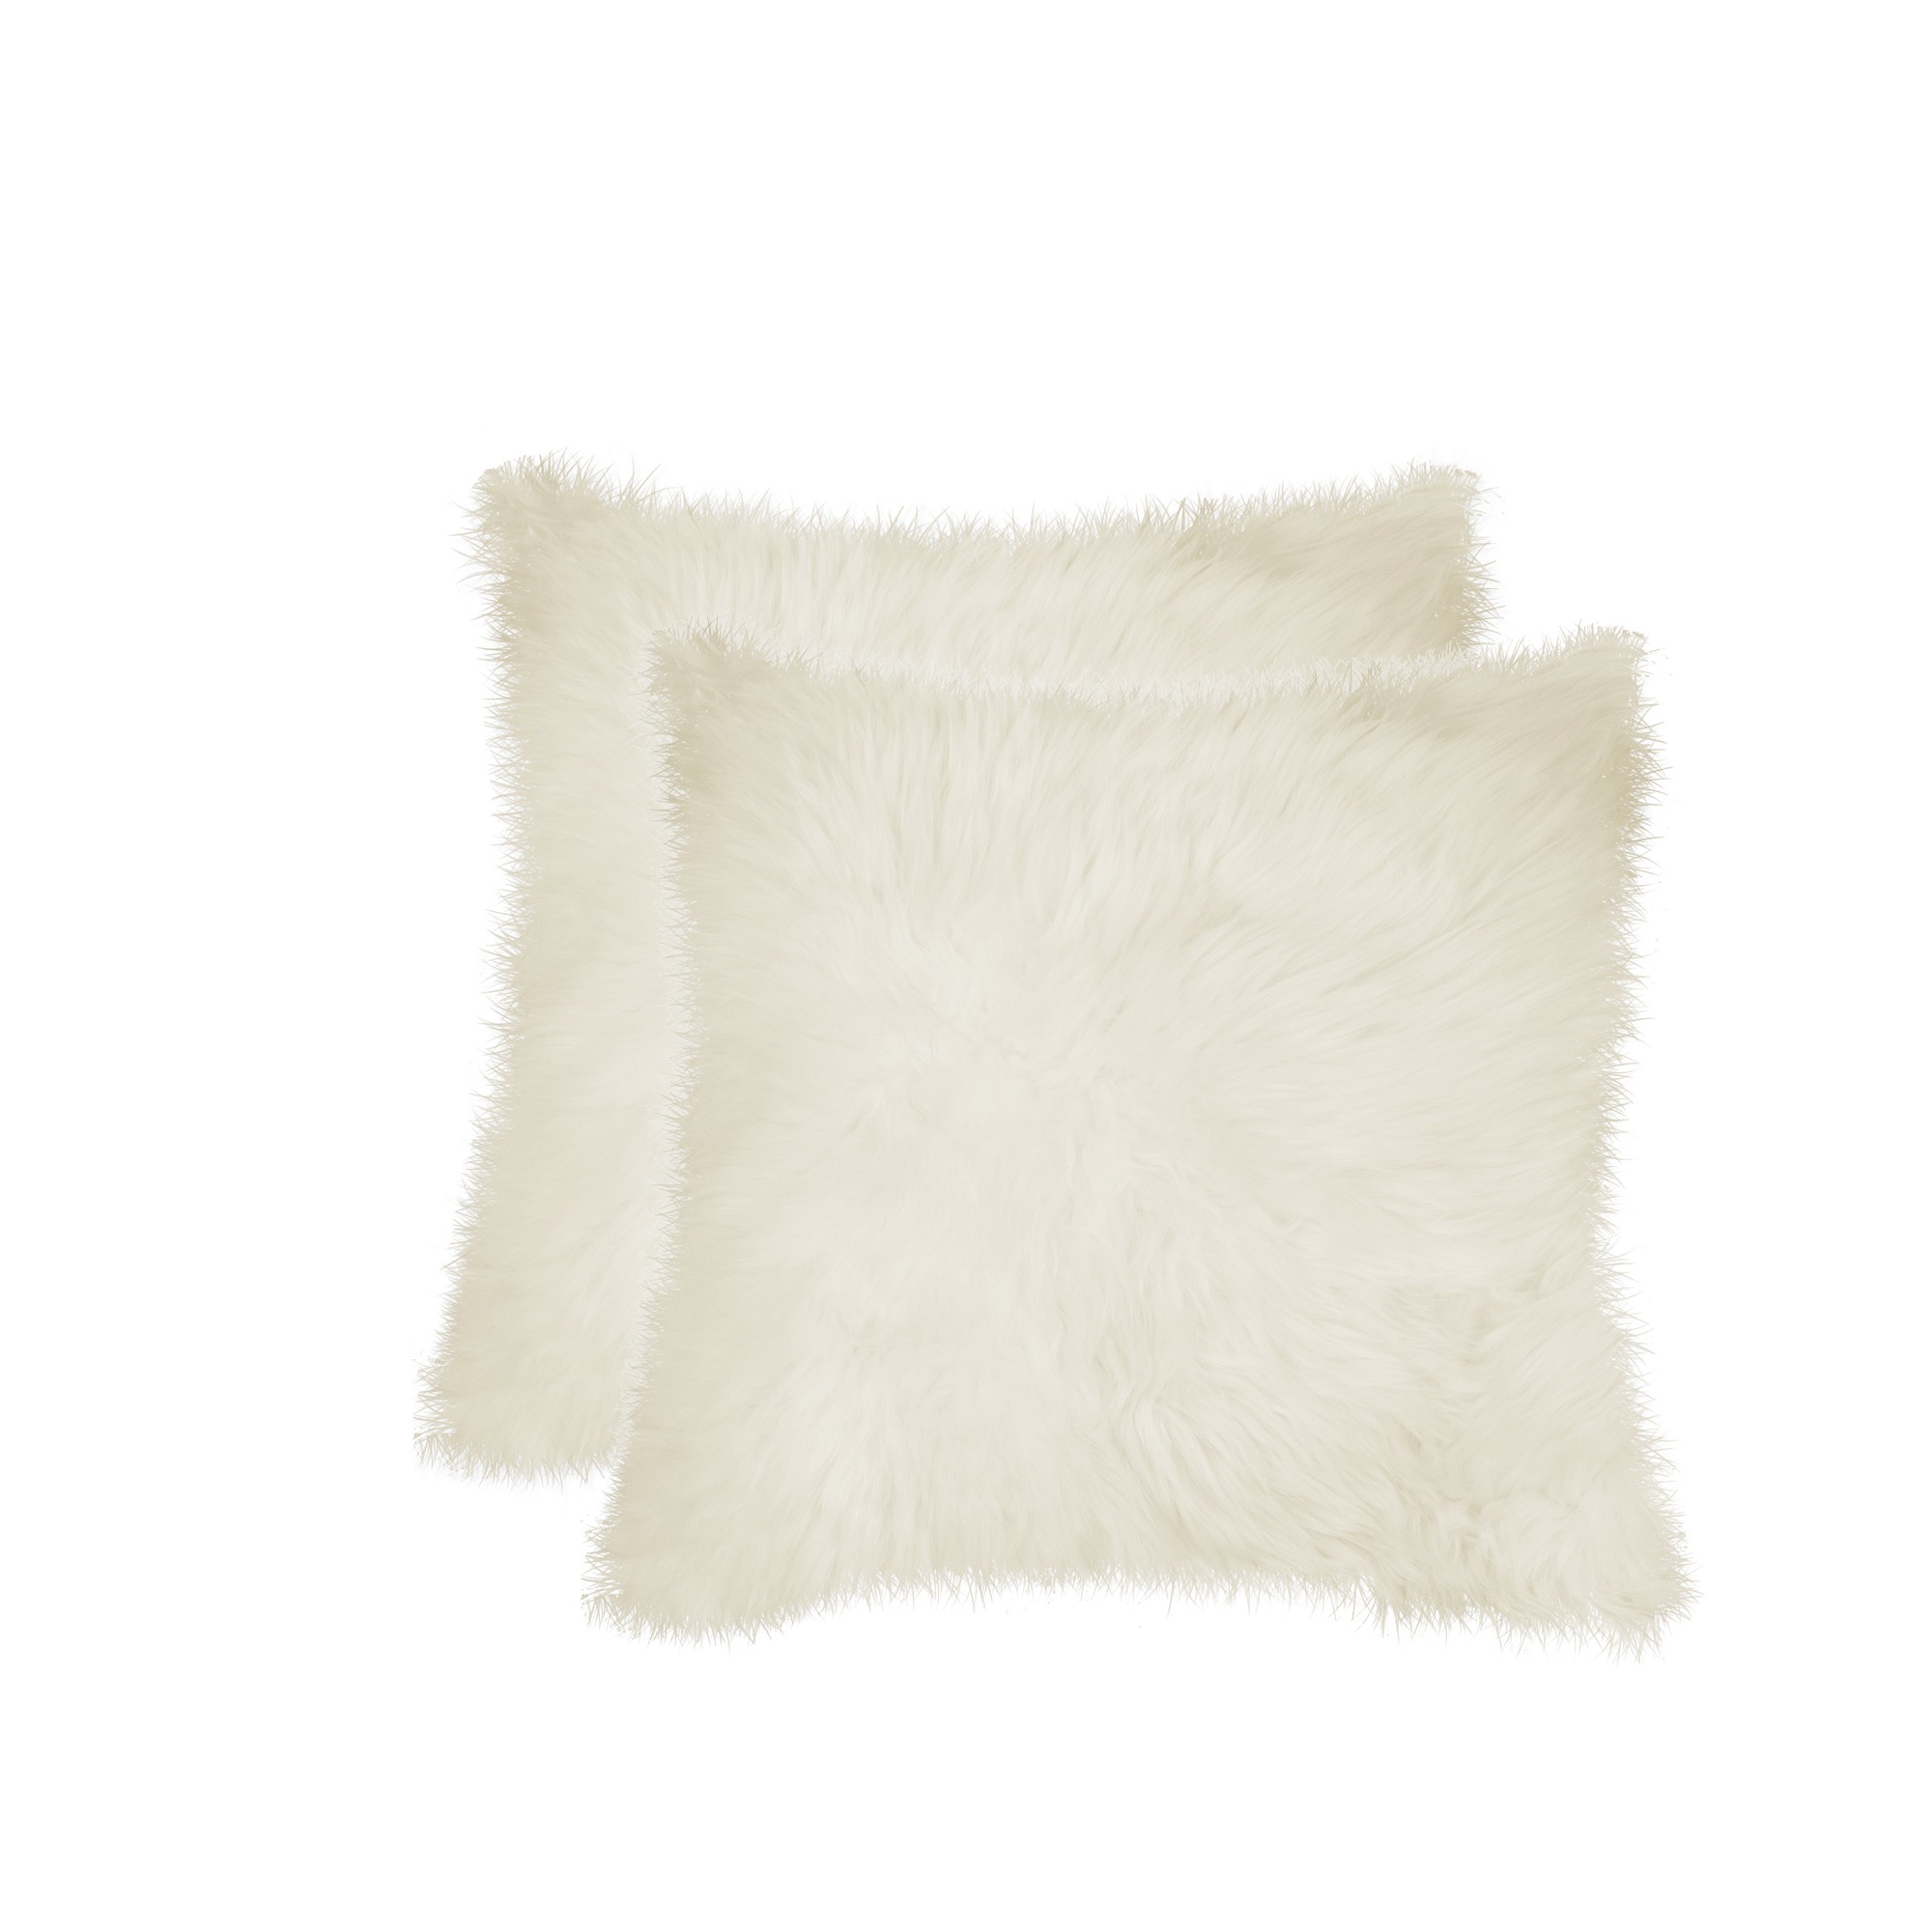 18" x 18" x 5" Natural Sheepskin - Pillow 2 pcs